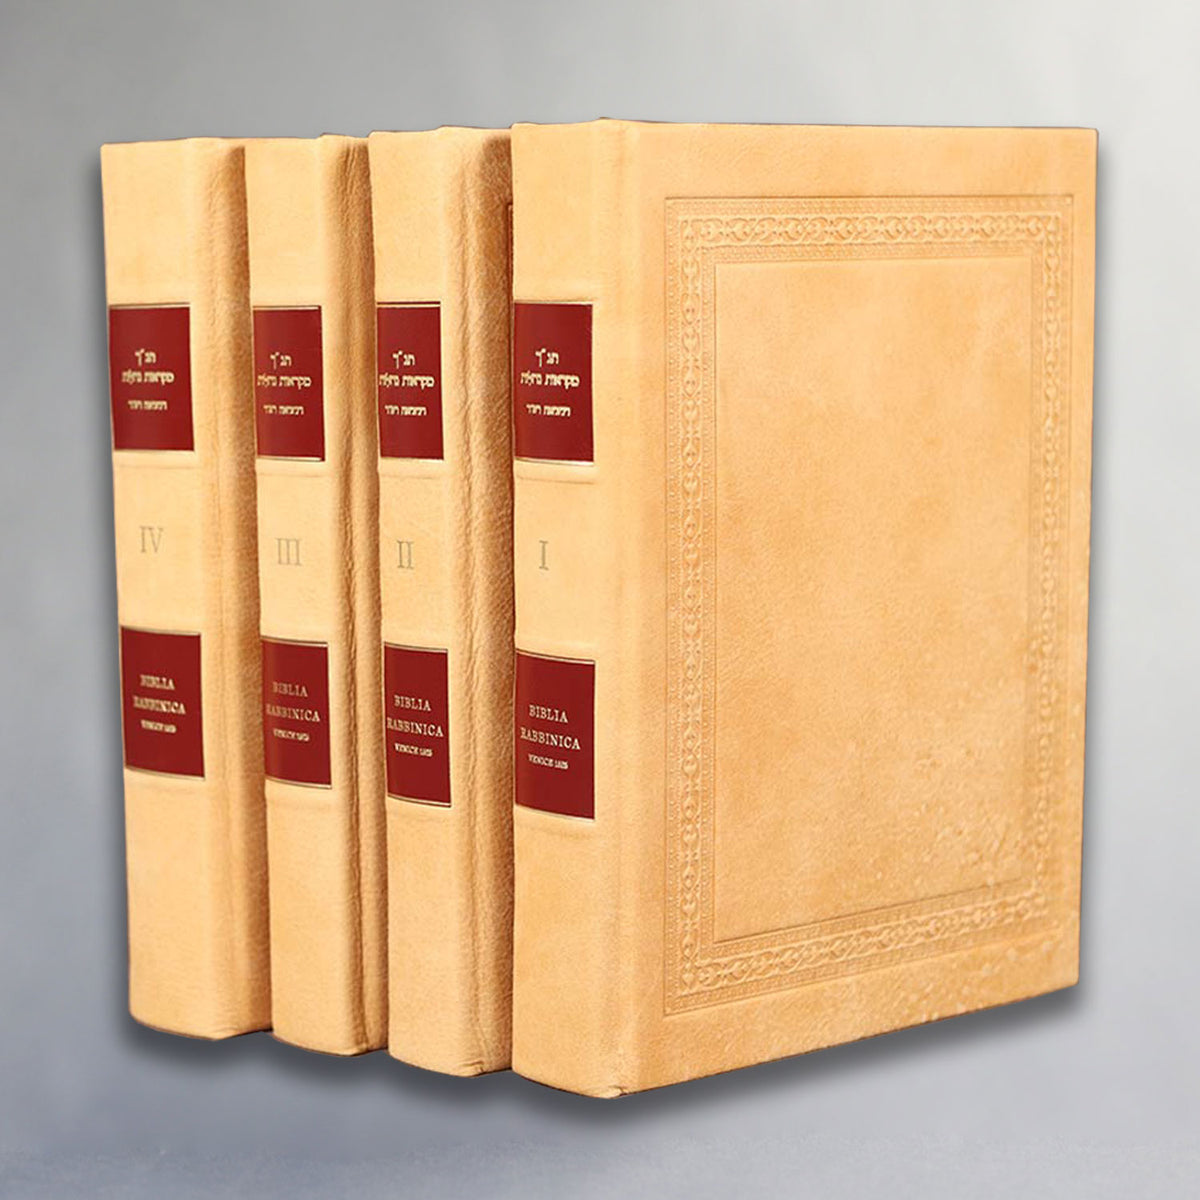 Mikraot Gedolot - 1525 Second Rabbinic Hebrew Bible Facsimile